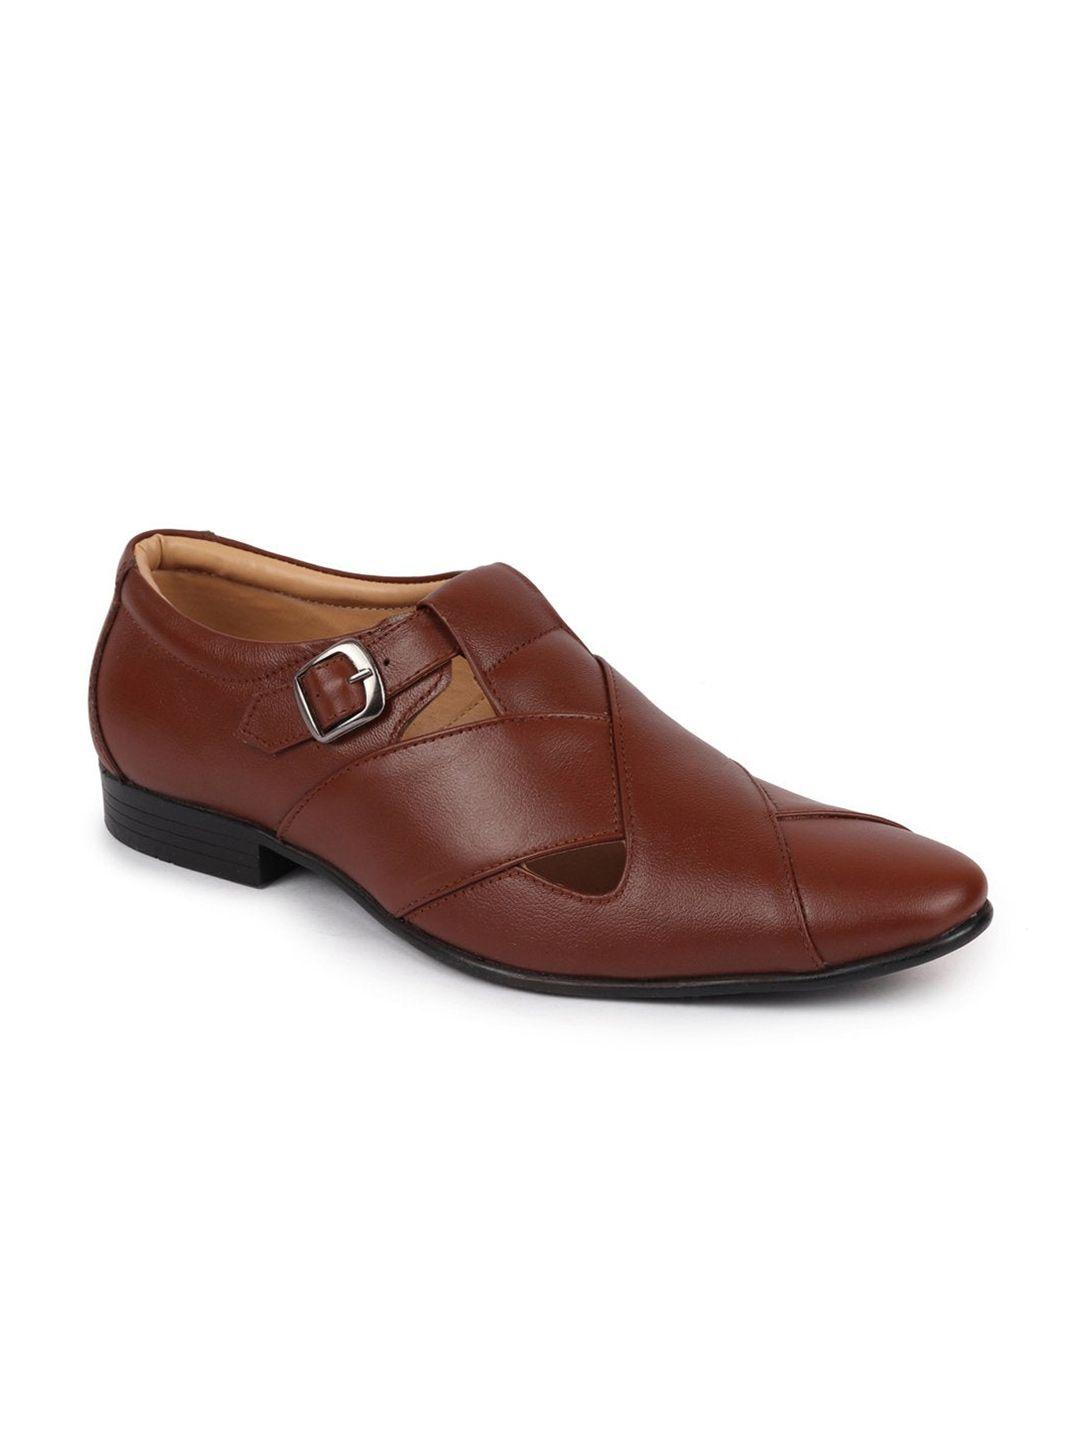 fausto-men-tan-leather-shoe-style-sandals